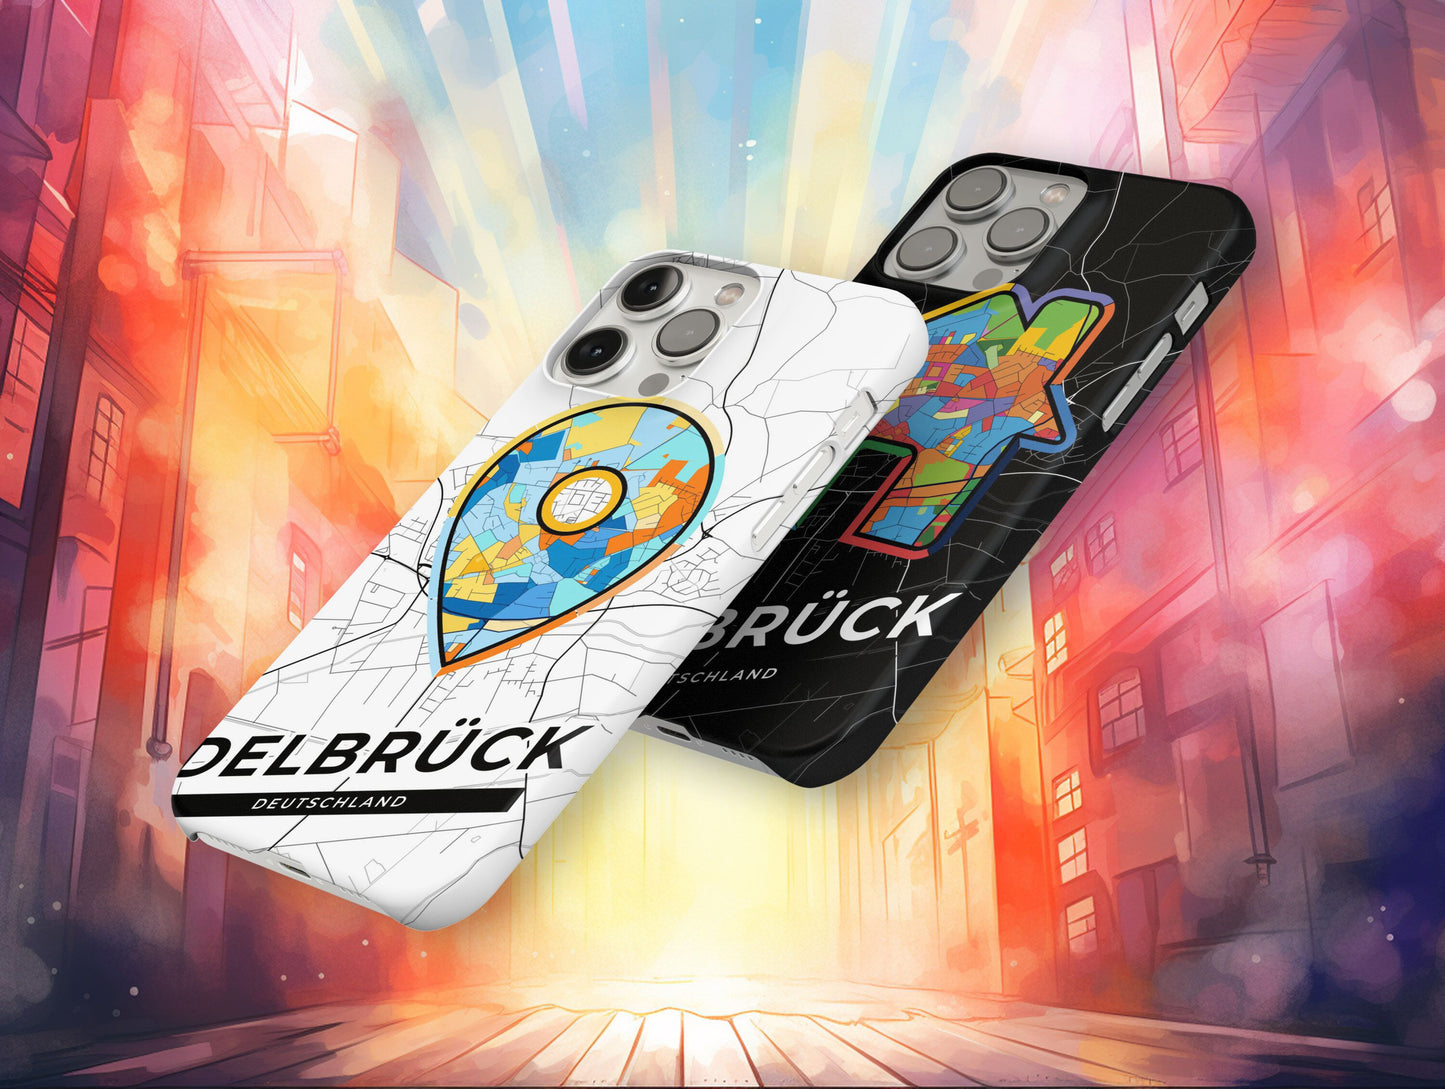 Delbrück Deutschland slim phone case with colorful icon. Birthday, wedding or housewarming gift. Couple match cases.